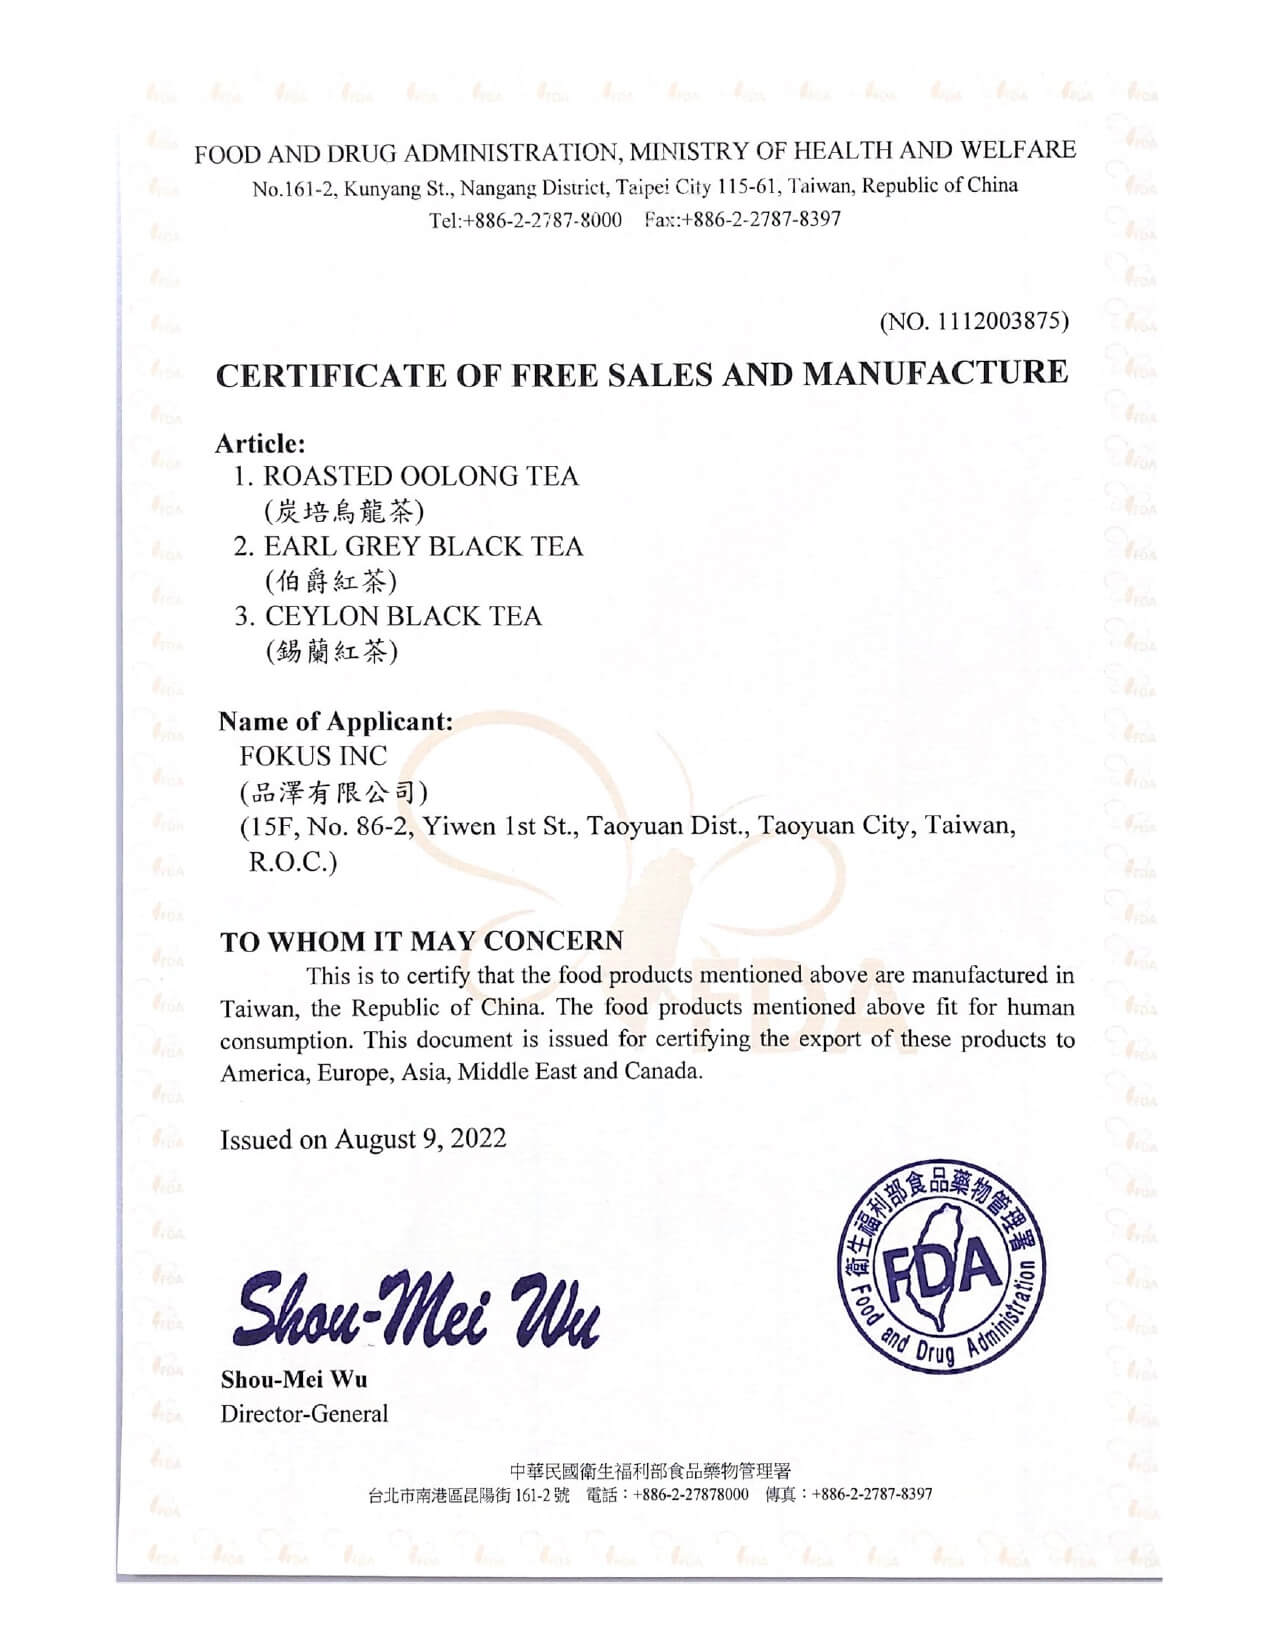 Free-sale-certificate for teas